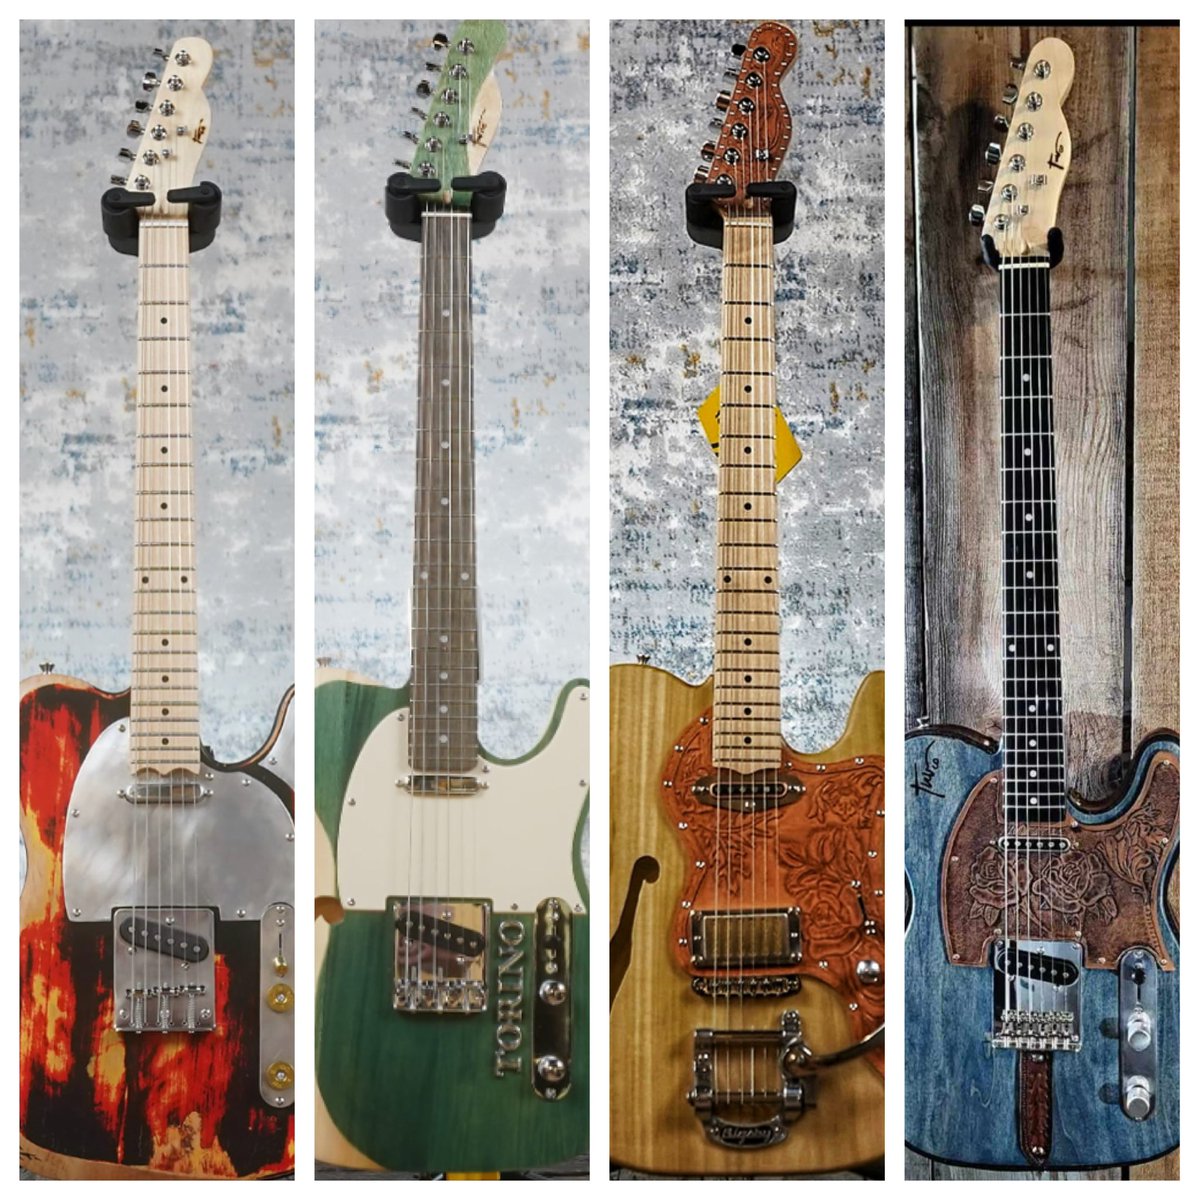 We build the best Teles. Check out tnvguitars.com/index.html 😎#guitars #guitar #TeleTuesday #handmade #handcrafted #woodworking #reclaimed #wood #barncaster #yyc #calgary #okotoks #madeincanada 🇨🇦#TNVguitars